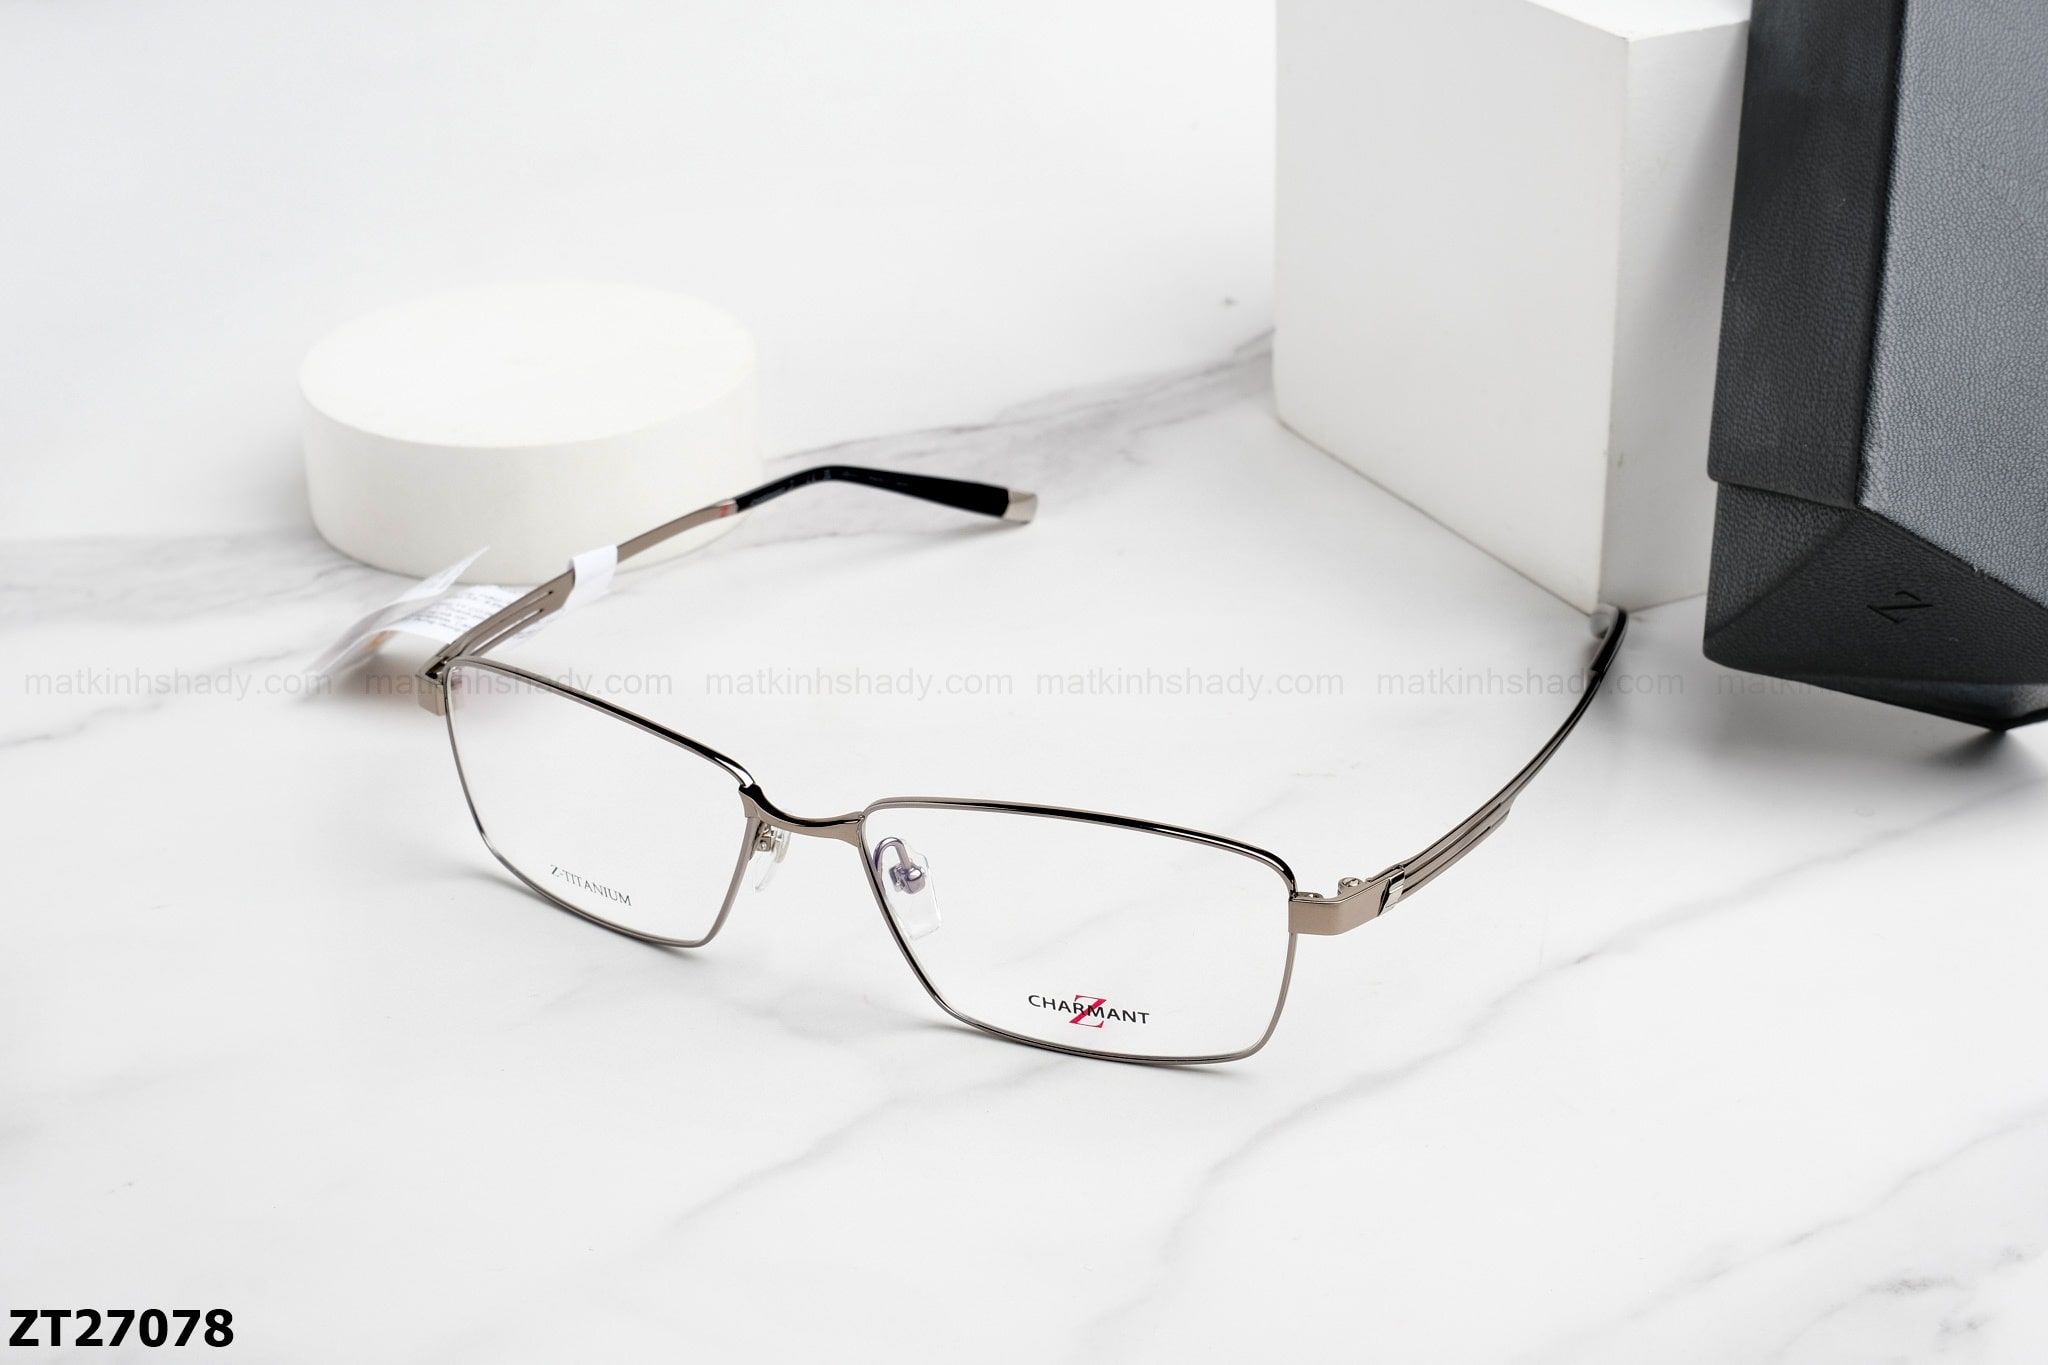  Charmant Z Eyewear - Glasses - ZT27078 